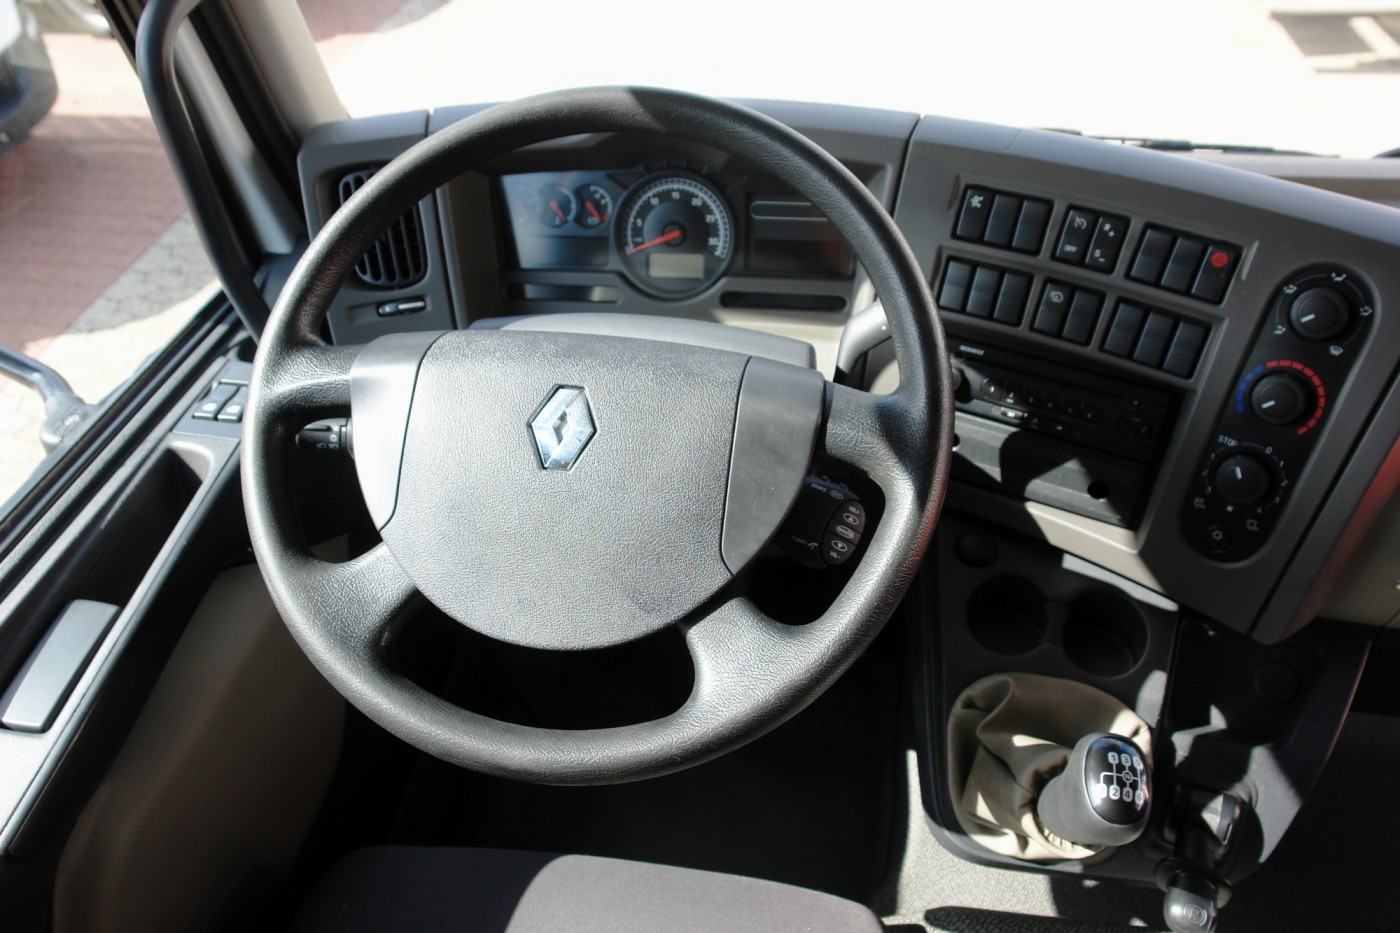 Renault Midlum 180DXi auto dizalica s korpom EN-140-TPC 14m opterećenje košara 200kg Električni pogon klima uređaj EURO5